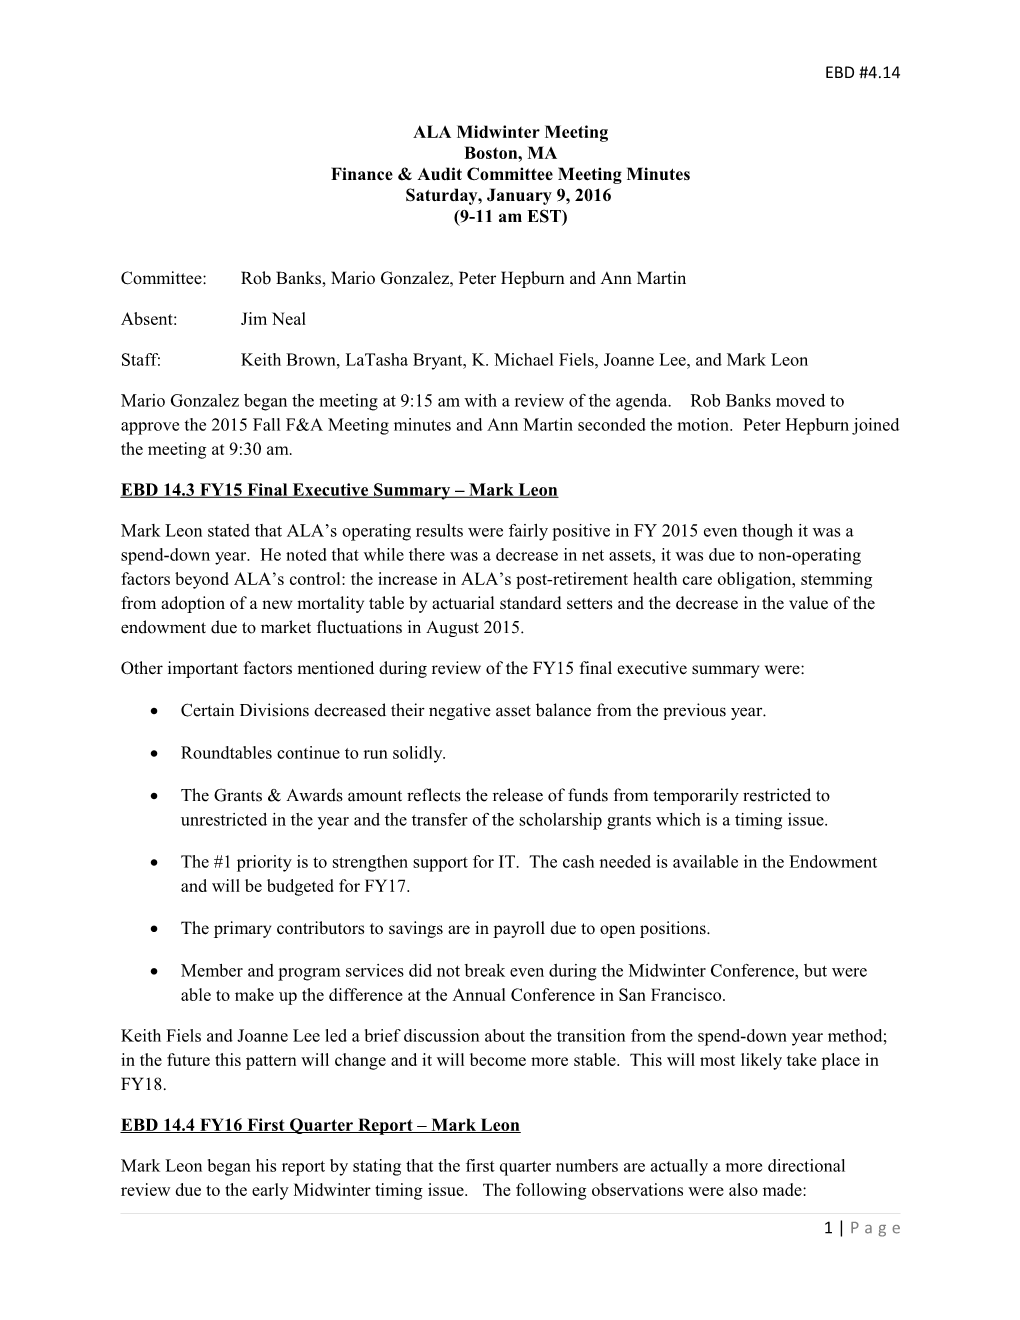 Finance & Auditcommittee Meeting Minutes